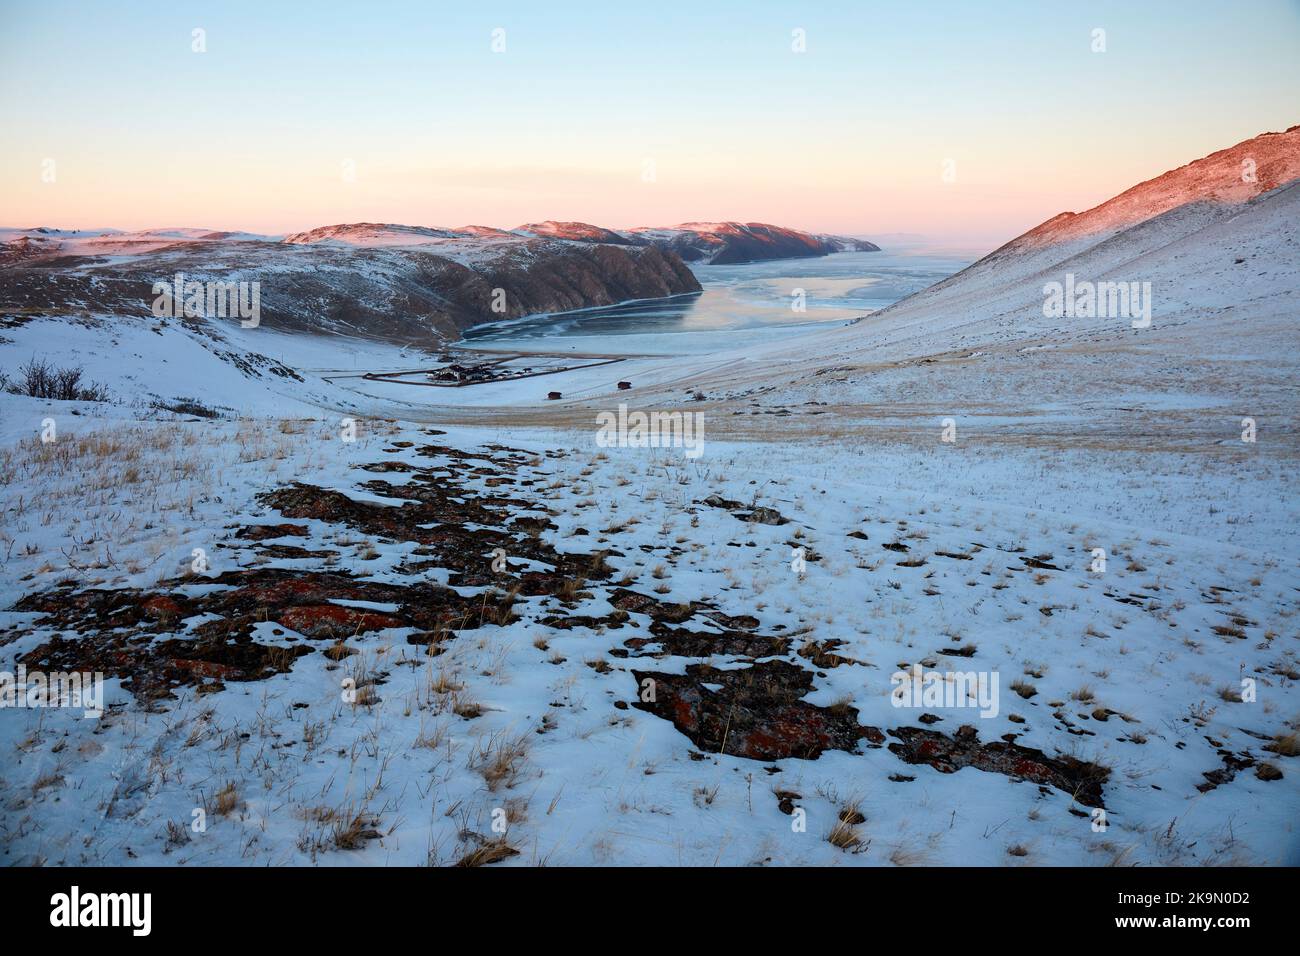 SIberian tundra scenary in winter with snow Stock Photo